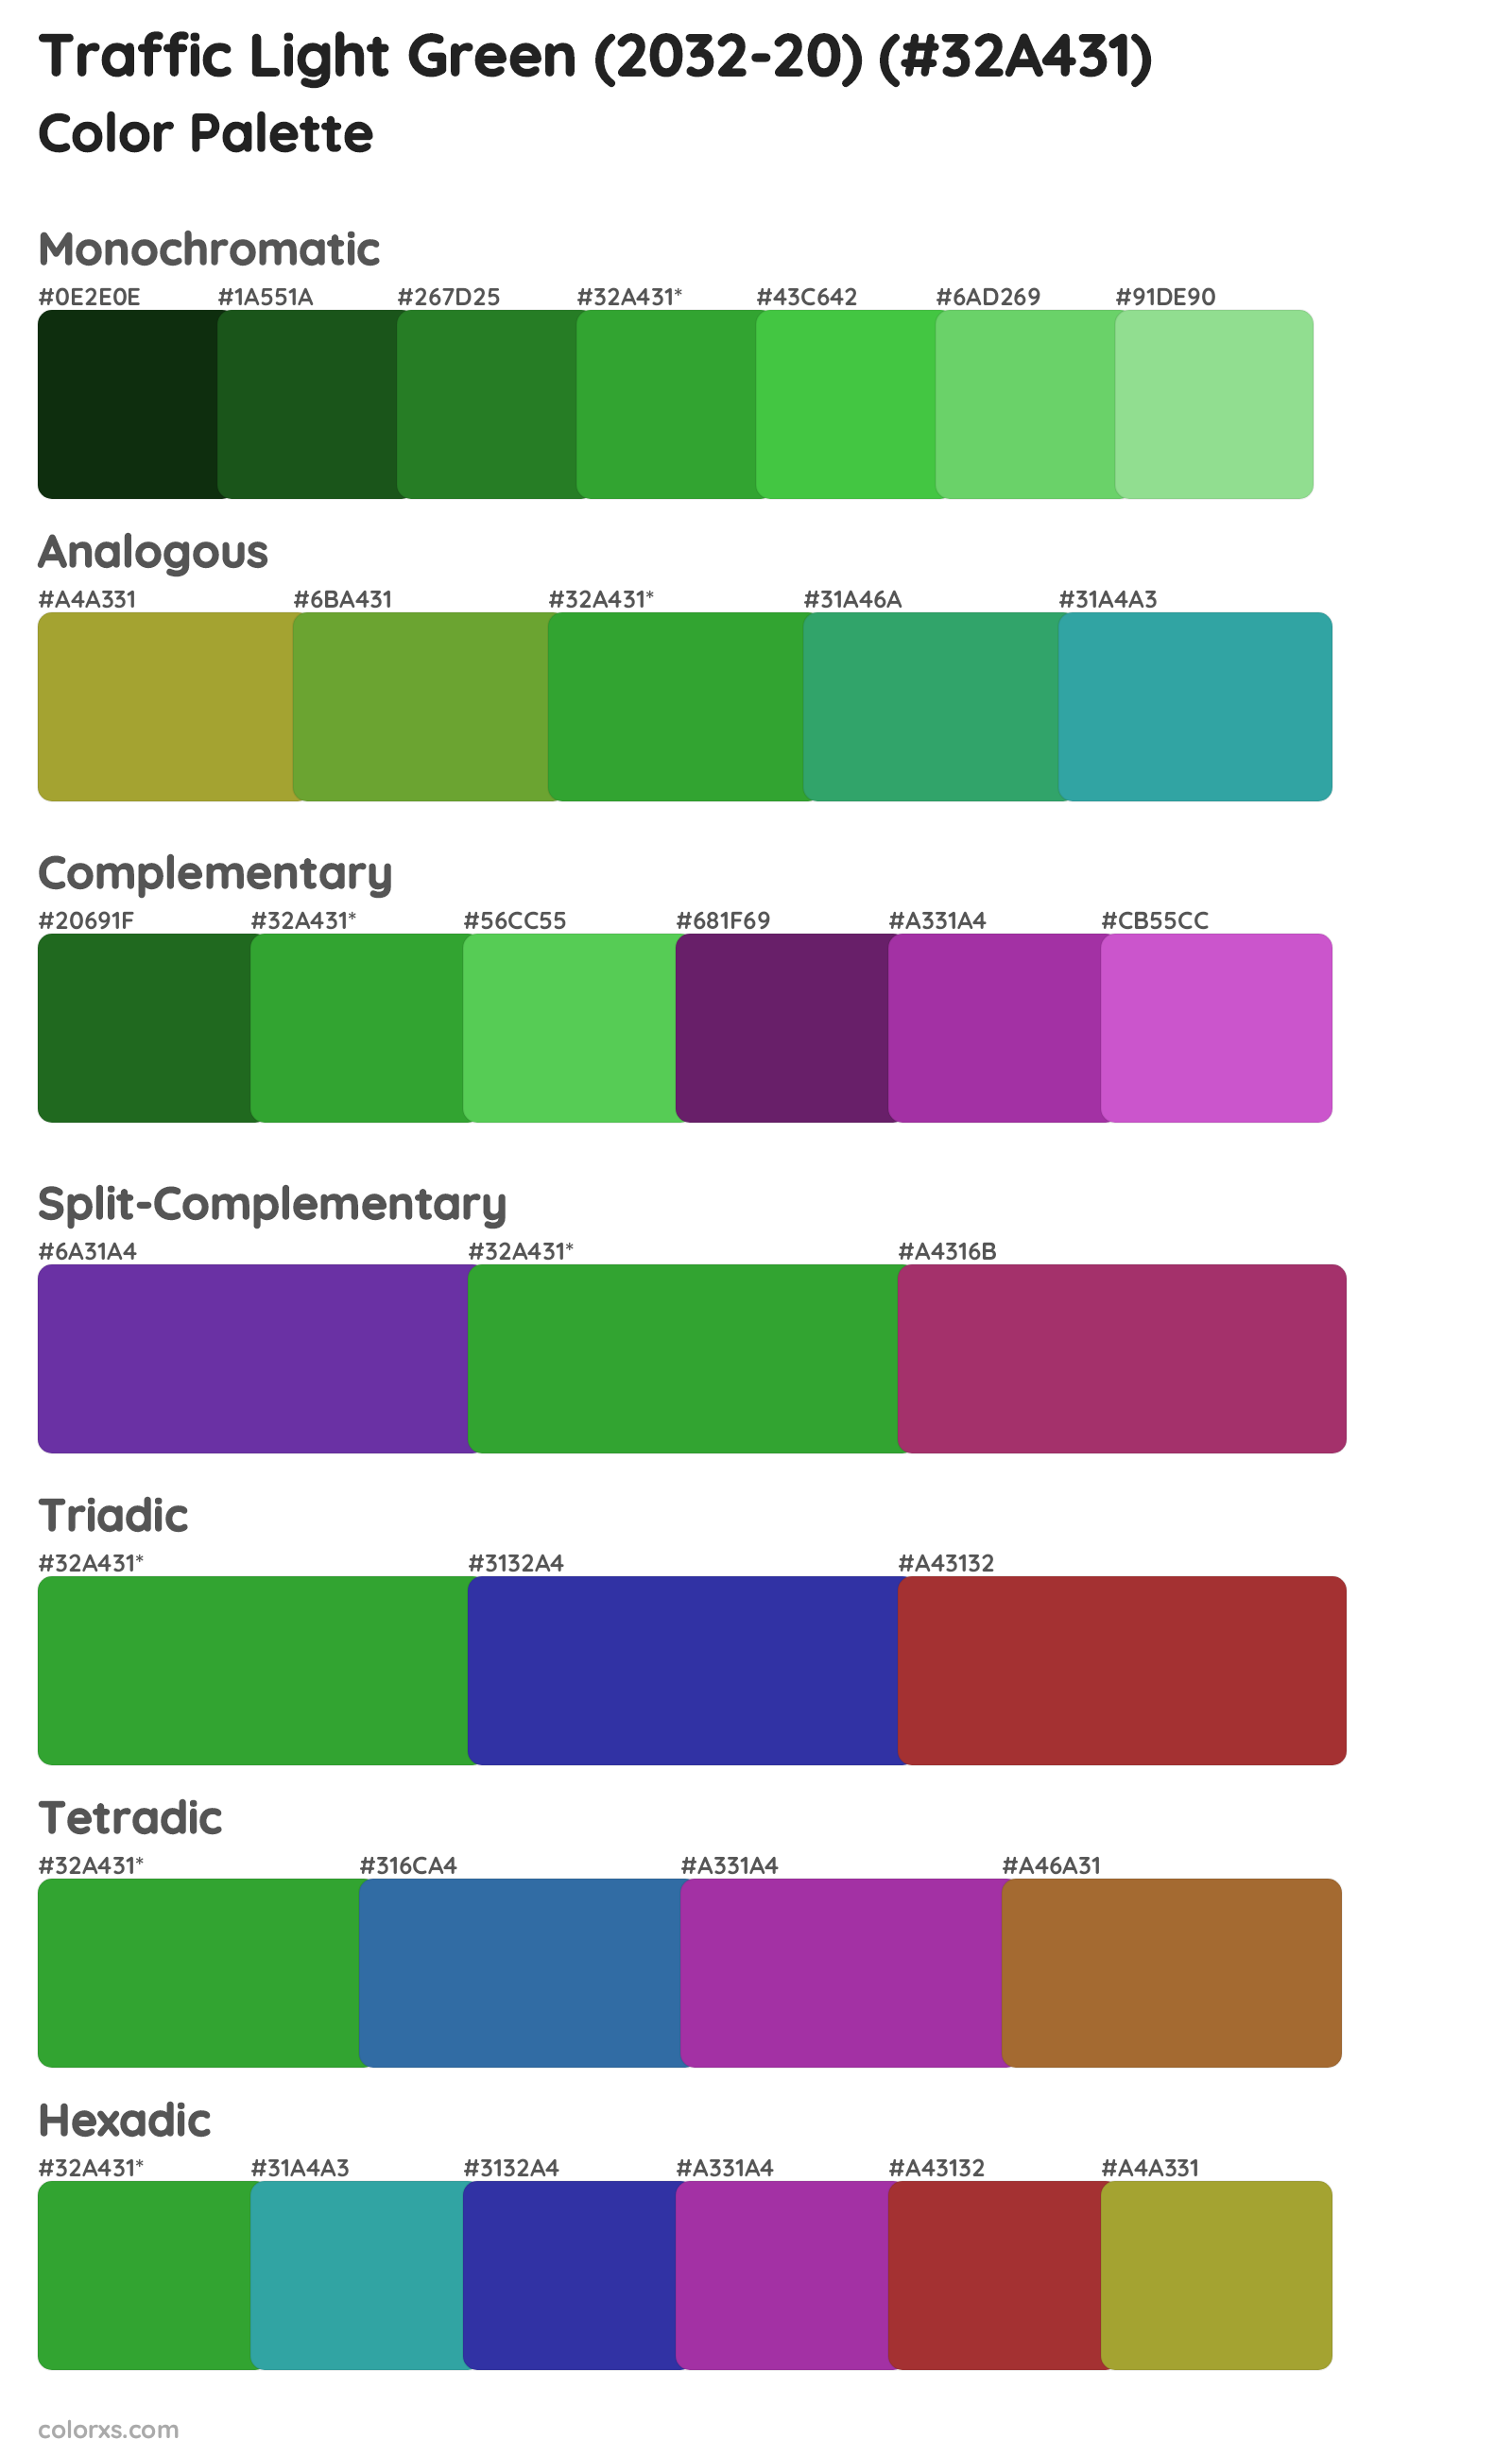 Traffic Light Green (2032-20) Color Scheme Palettes